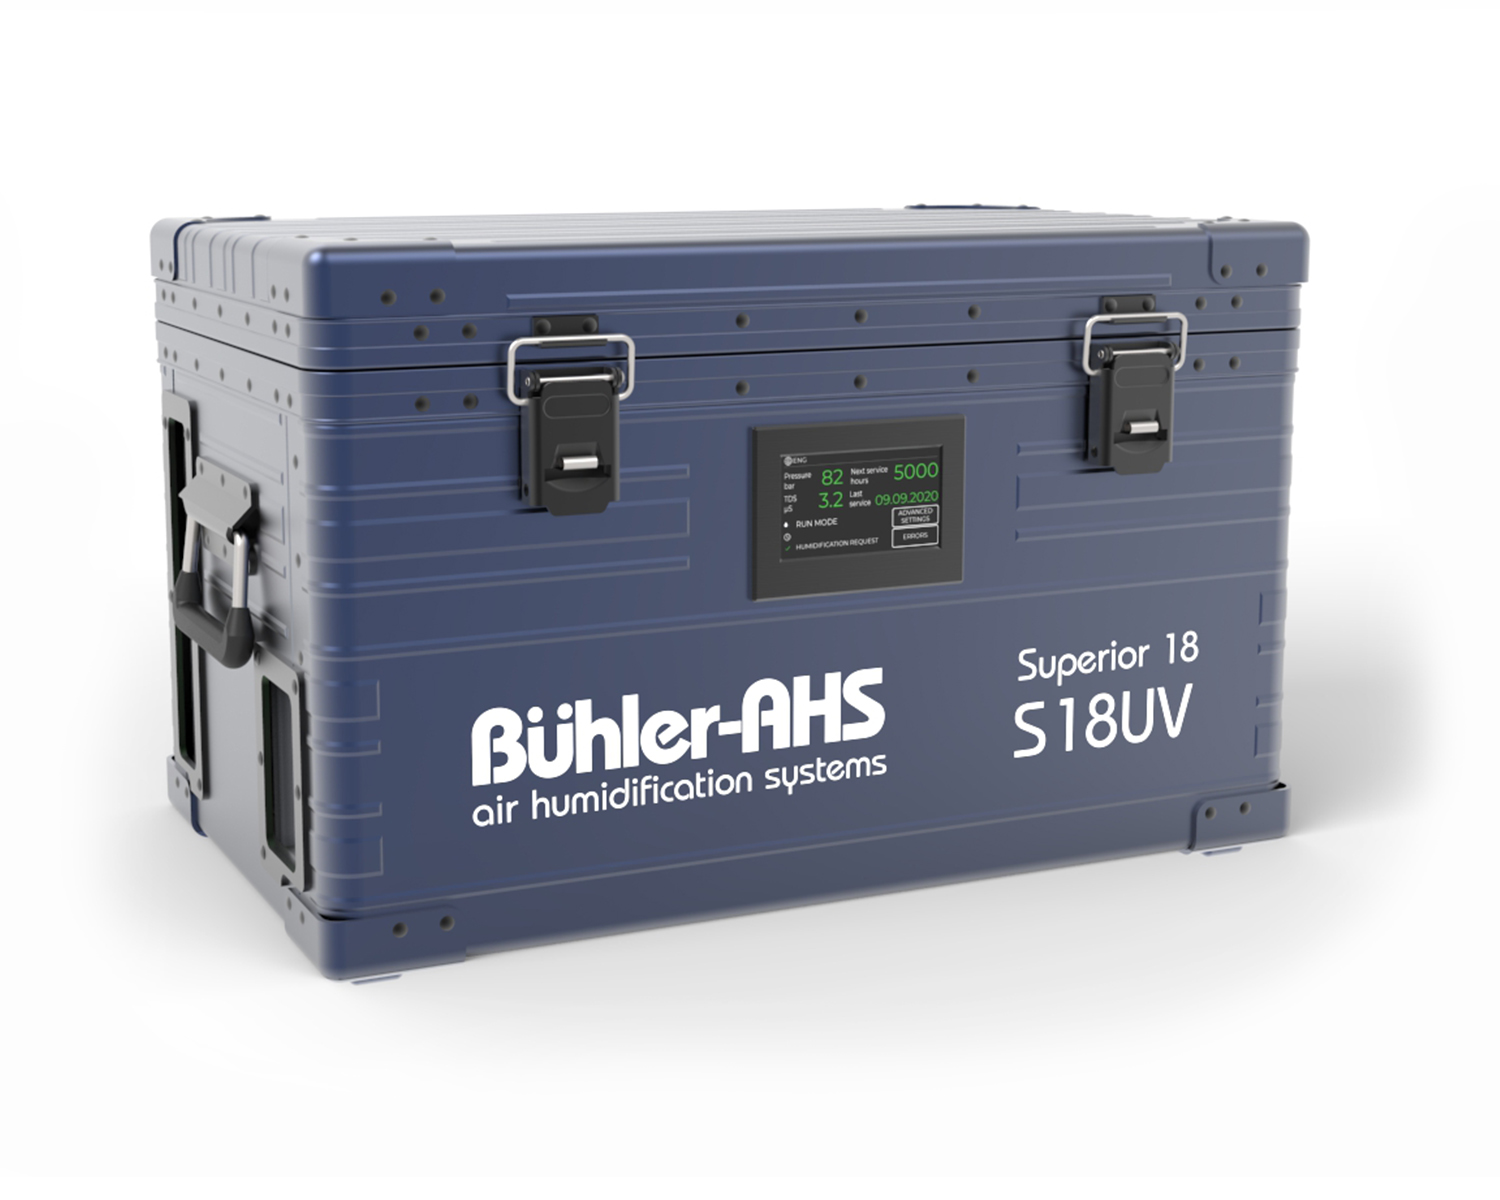 Buhler-AHS Central module S18U